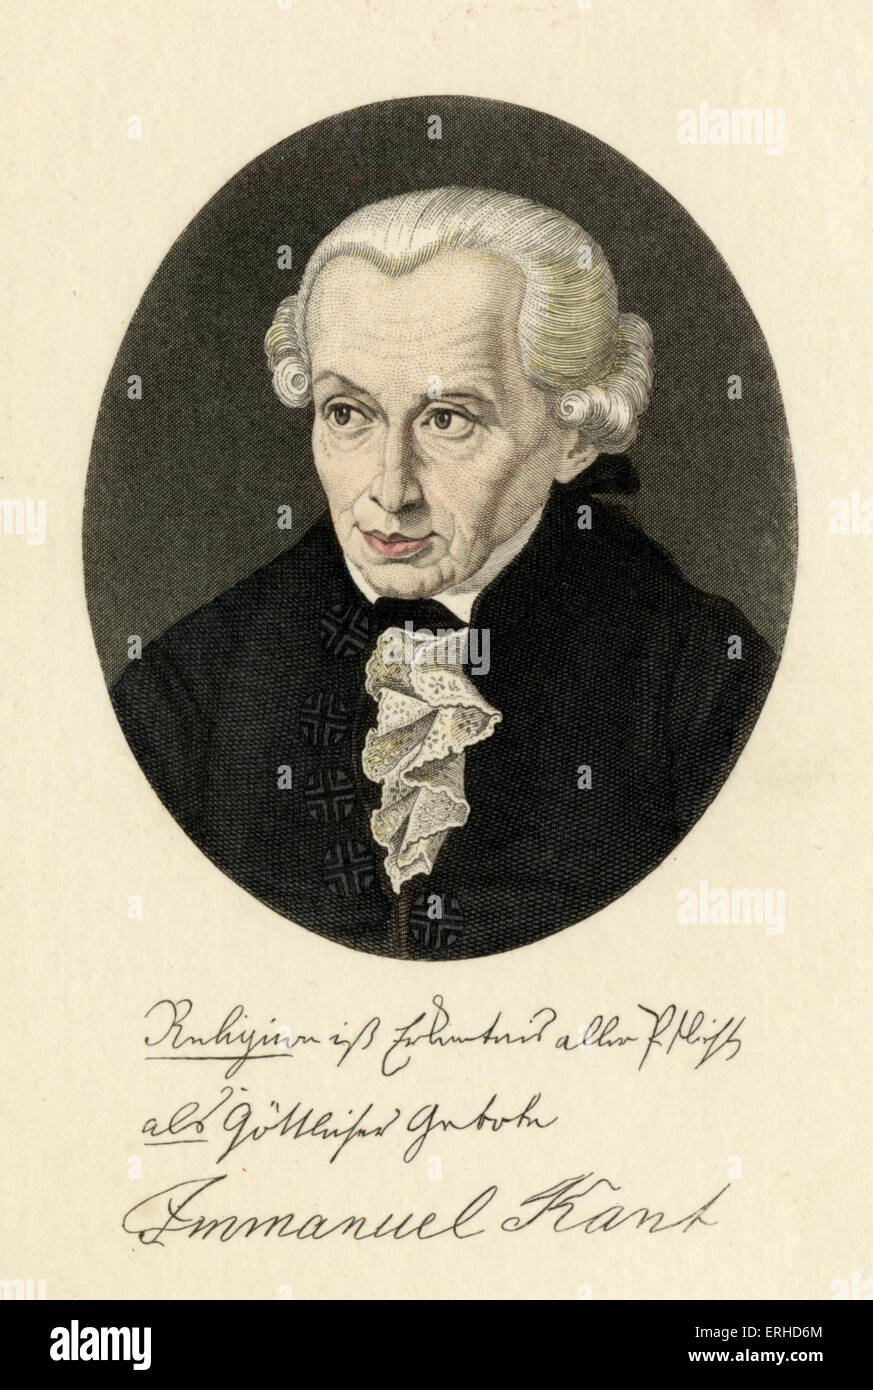 Immanuel Kant - German Prussian philosopher, 22 April 1724 - 12 February 1804. Stock Photo